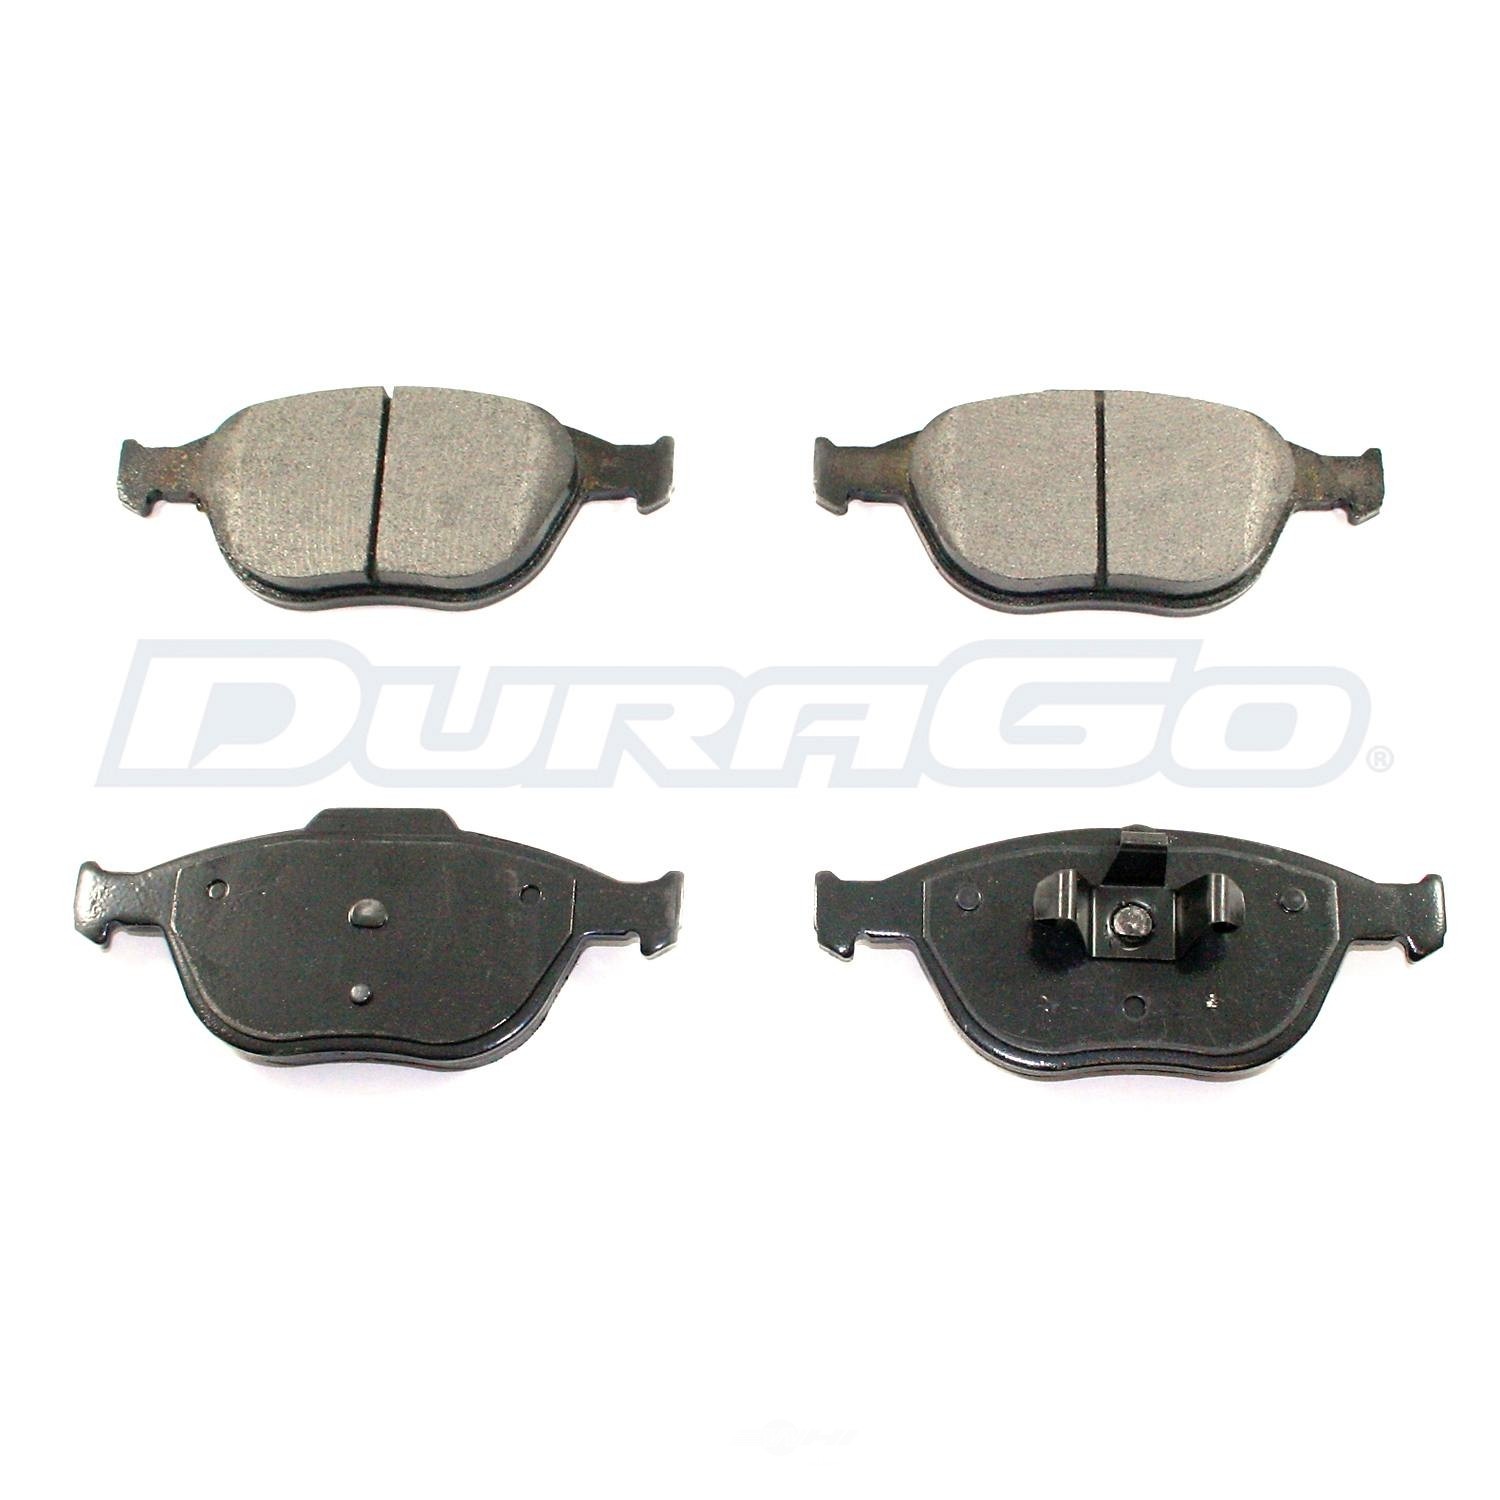 DURAGO - Disc Brake Pad (Front) - D48 BP970C